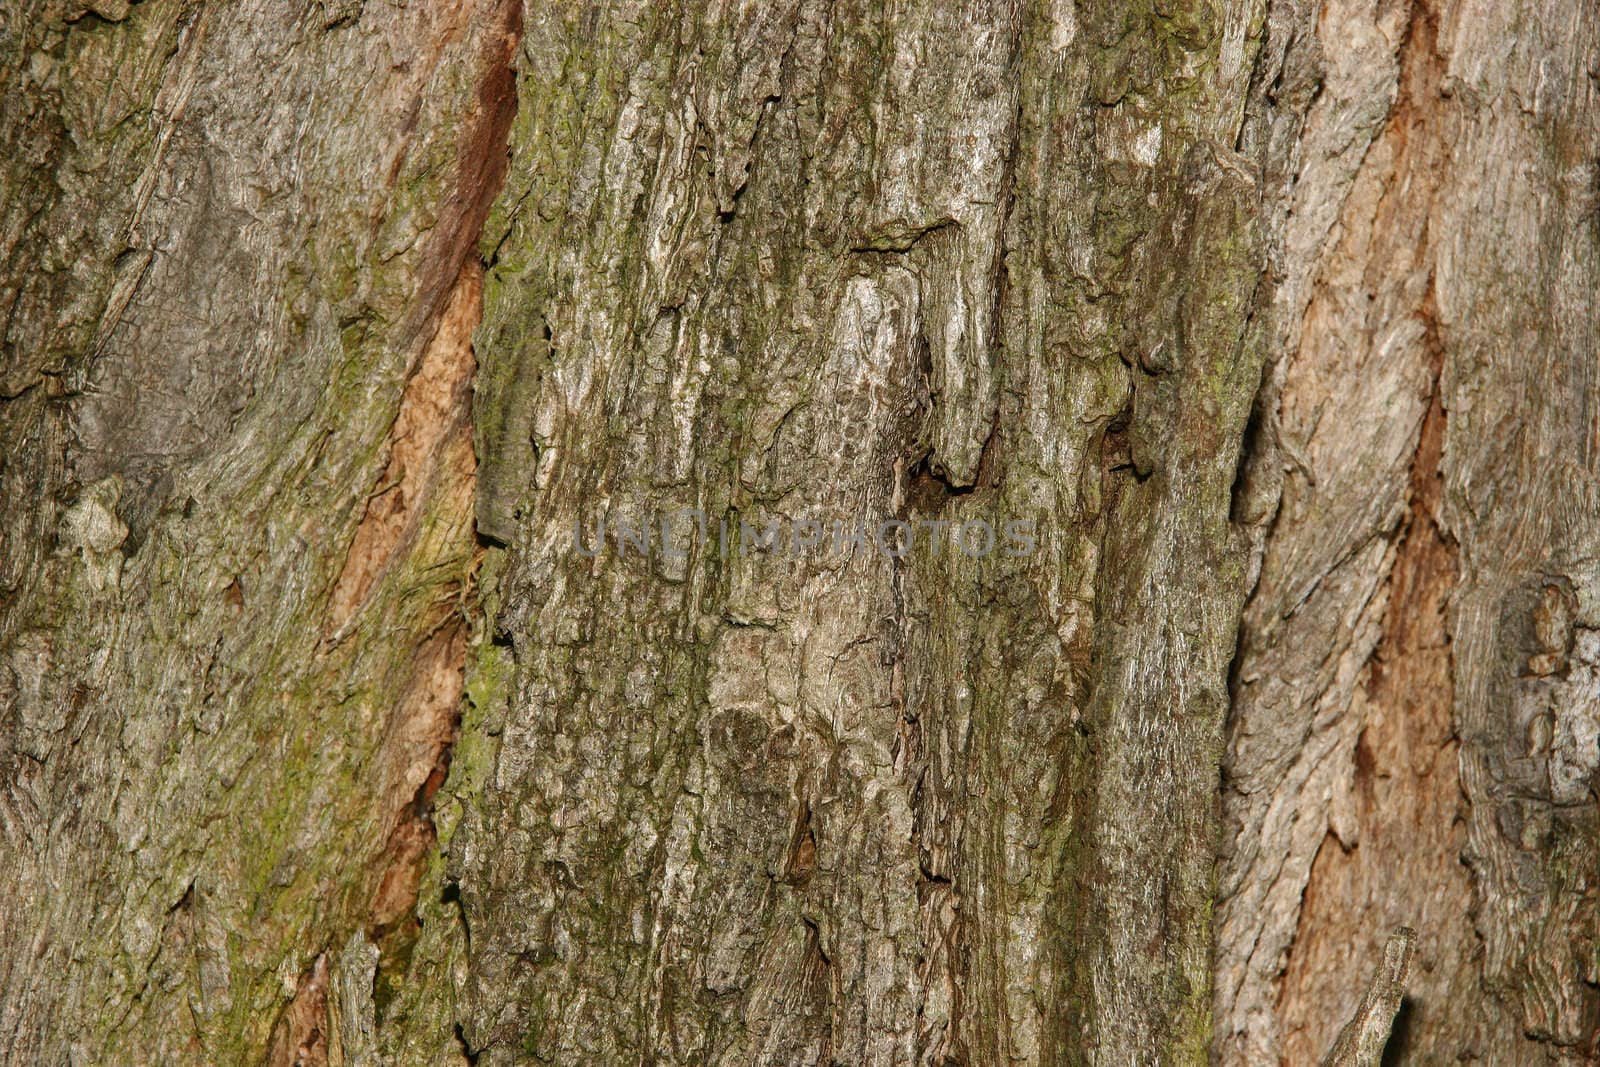 Black locust bark (Robinia pseudoacacia) by tdietrich